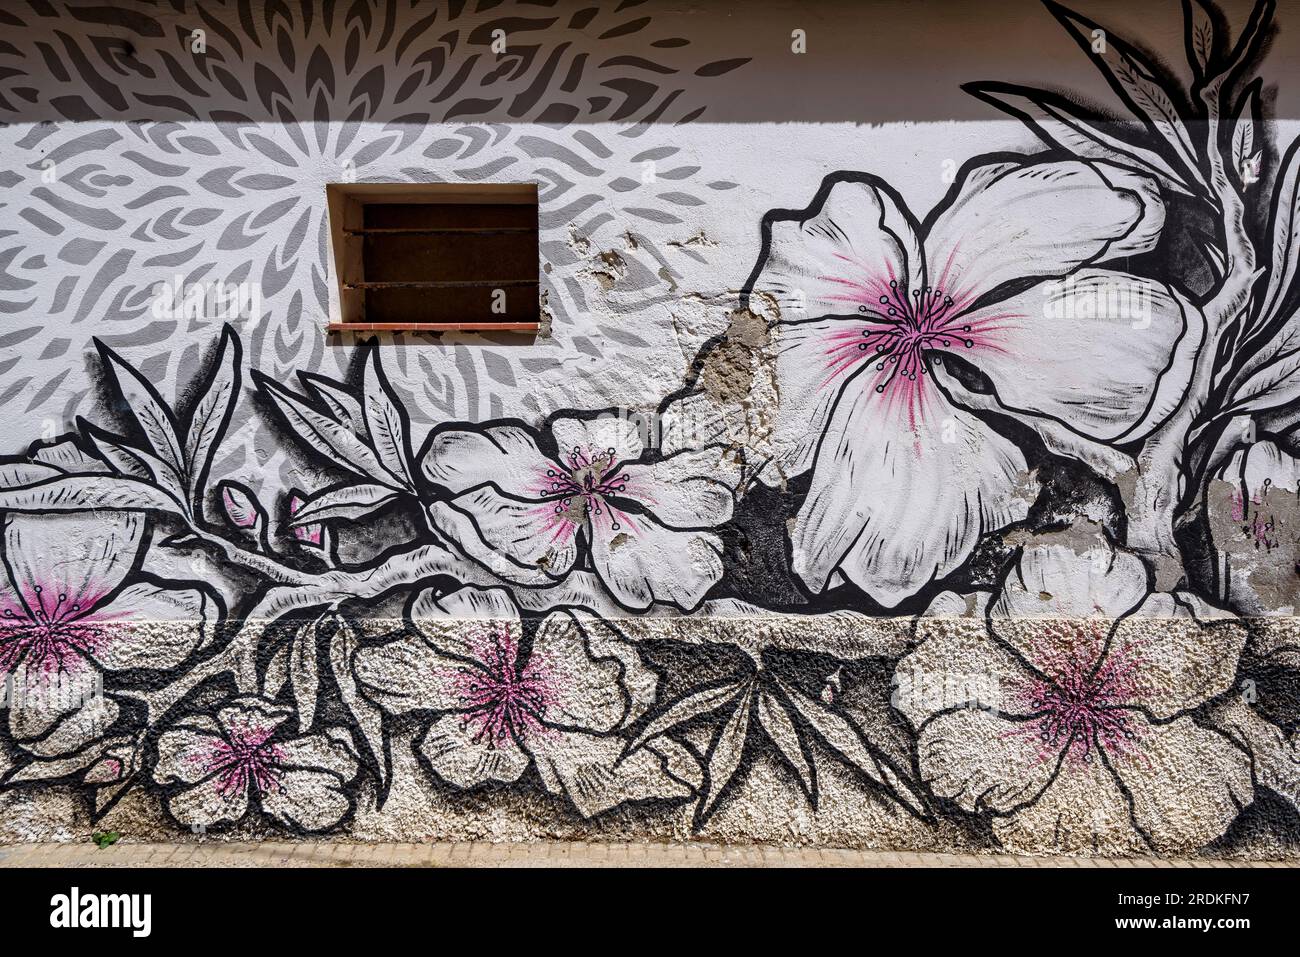 Murals painted on houses in the town of Penelles after the Gar-Gar festival (La Noguera, Lleida, Catalonia, Spain) ESP: Murales pintados en Penelles Stock Photo